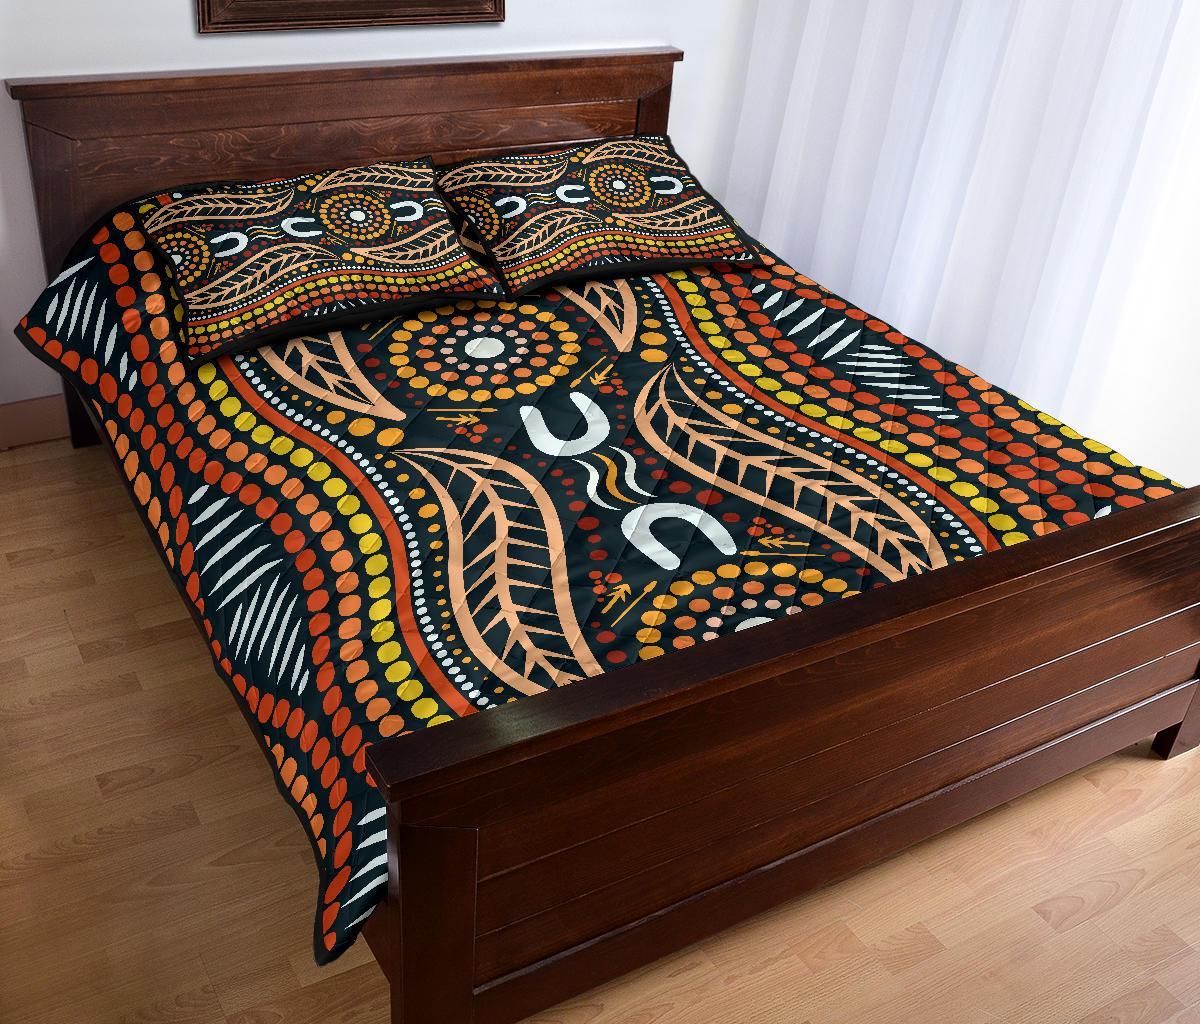 aboriginal-quilt-bed-set-indigenous-dot-painting